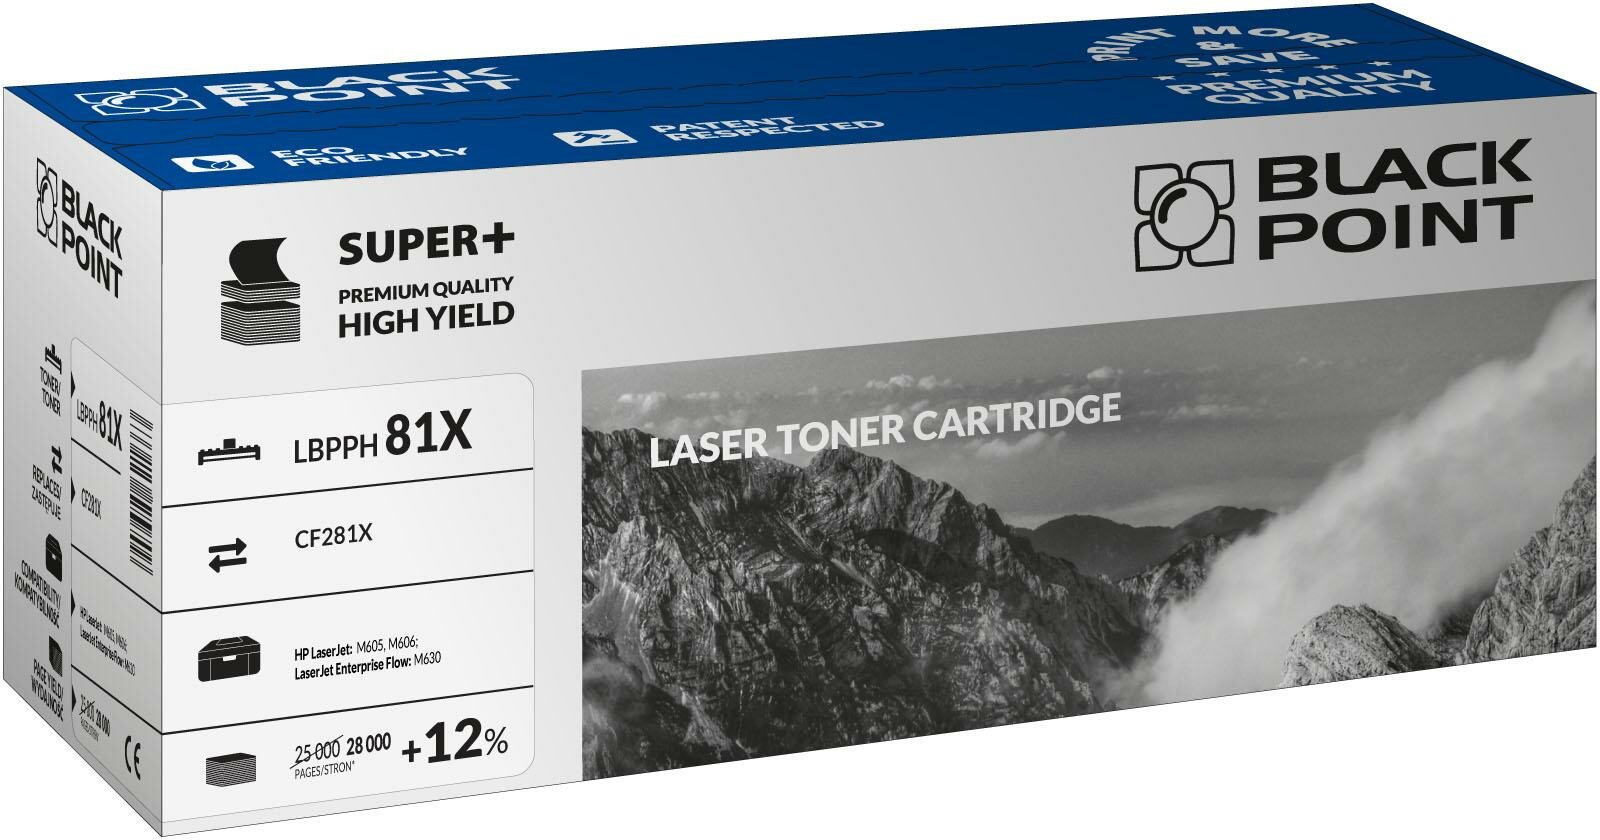 Toner laserowy Black Point Super Plus LBPPH81X widok na przód